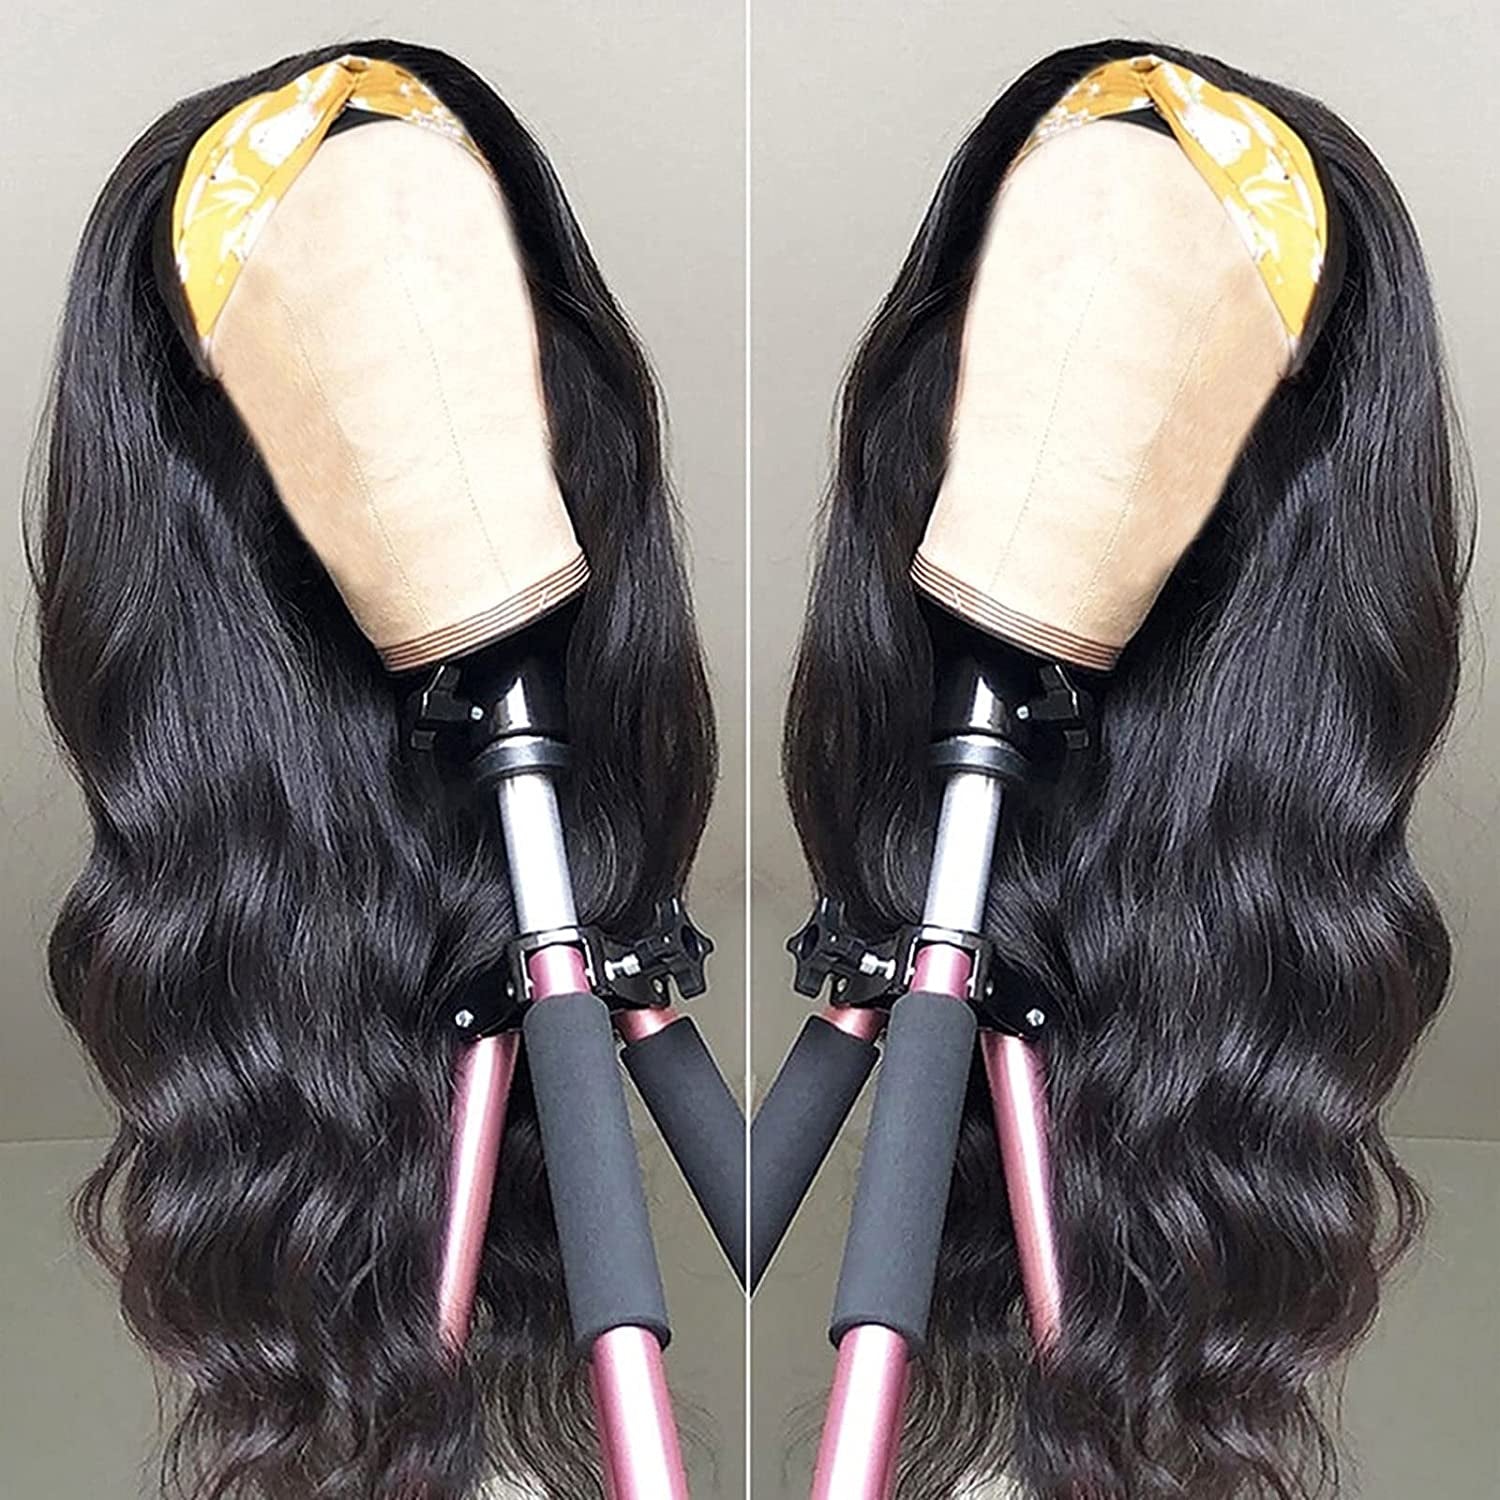 Catti Headband Wigs for Black Women Body Wave Headband Wig Human Hair Wigs Brazilian Virgin Hair Machine Made Wigs Headband Wig 150% Density (18" Headband Wigs)